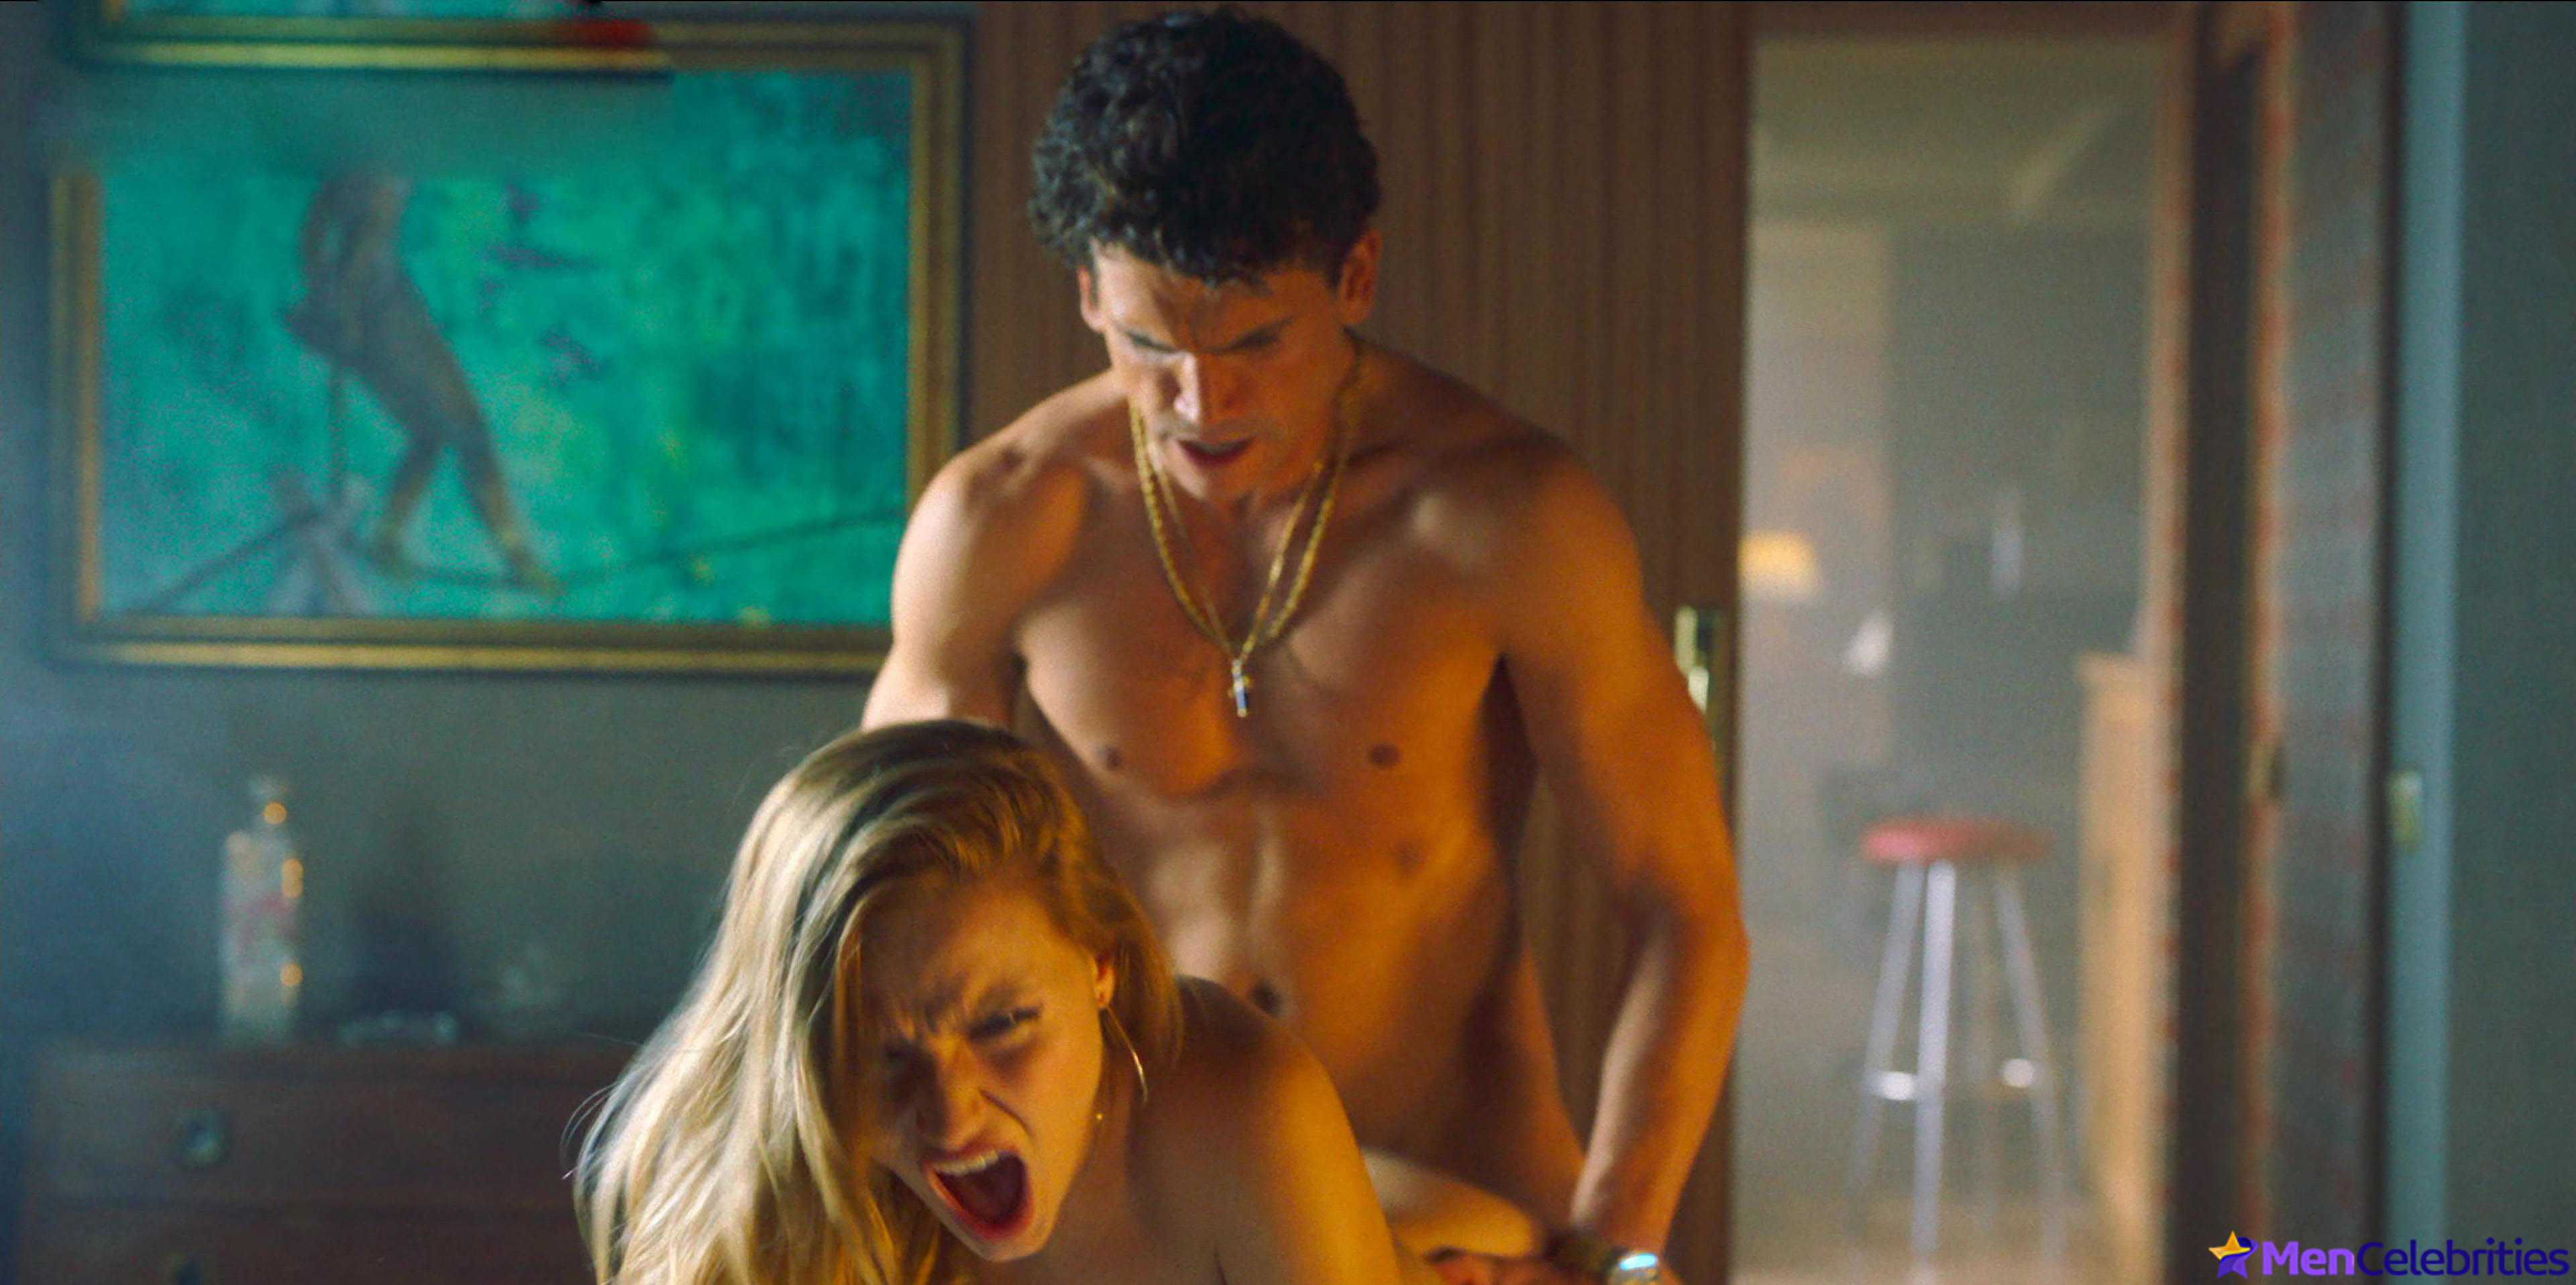 Jaime Lorente Nude And Gay Sex Scenes